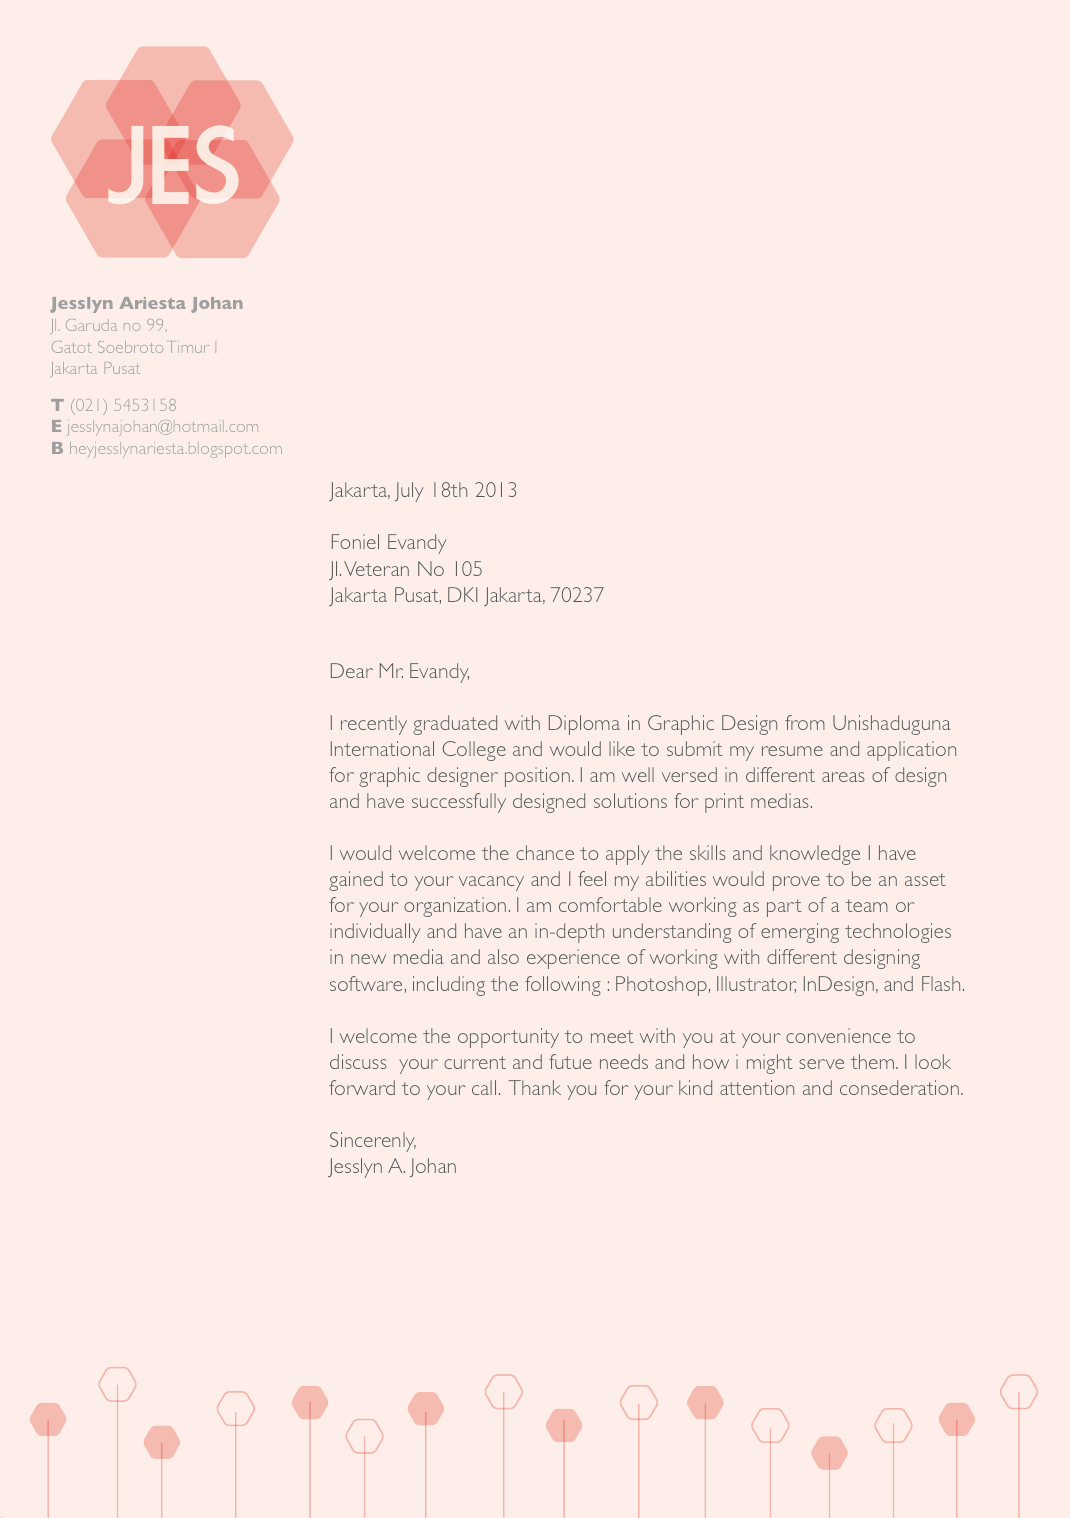 Cover letter for designers job